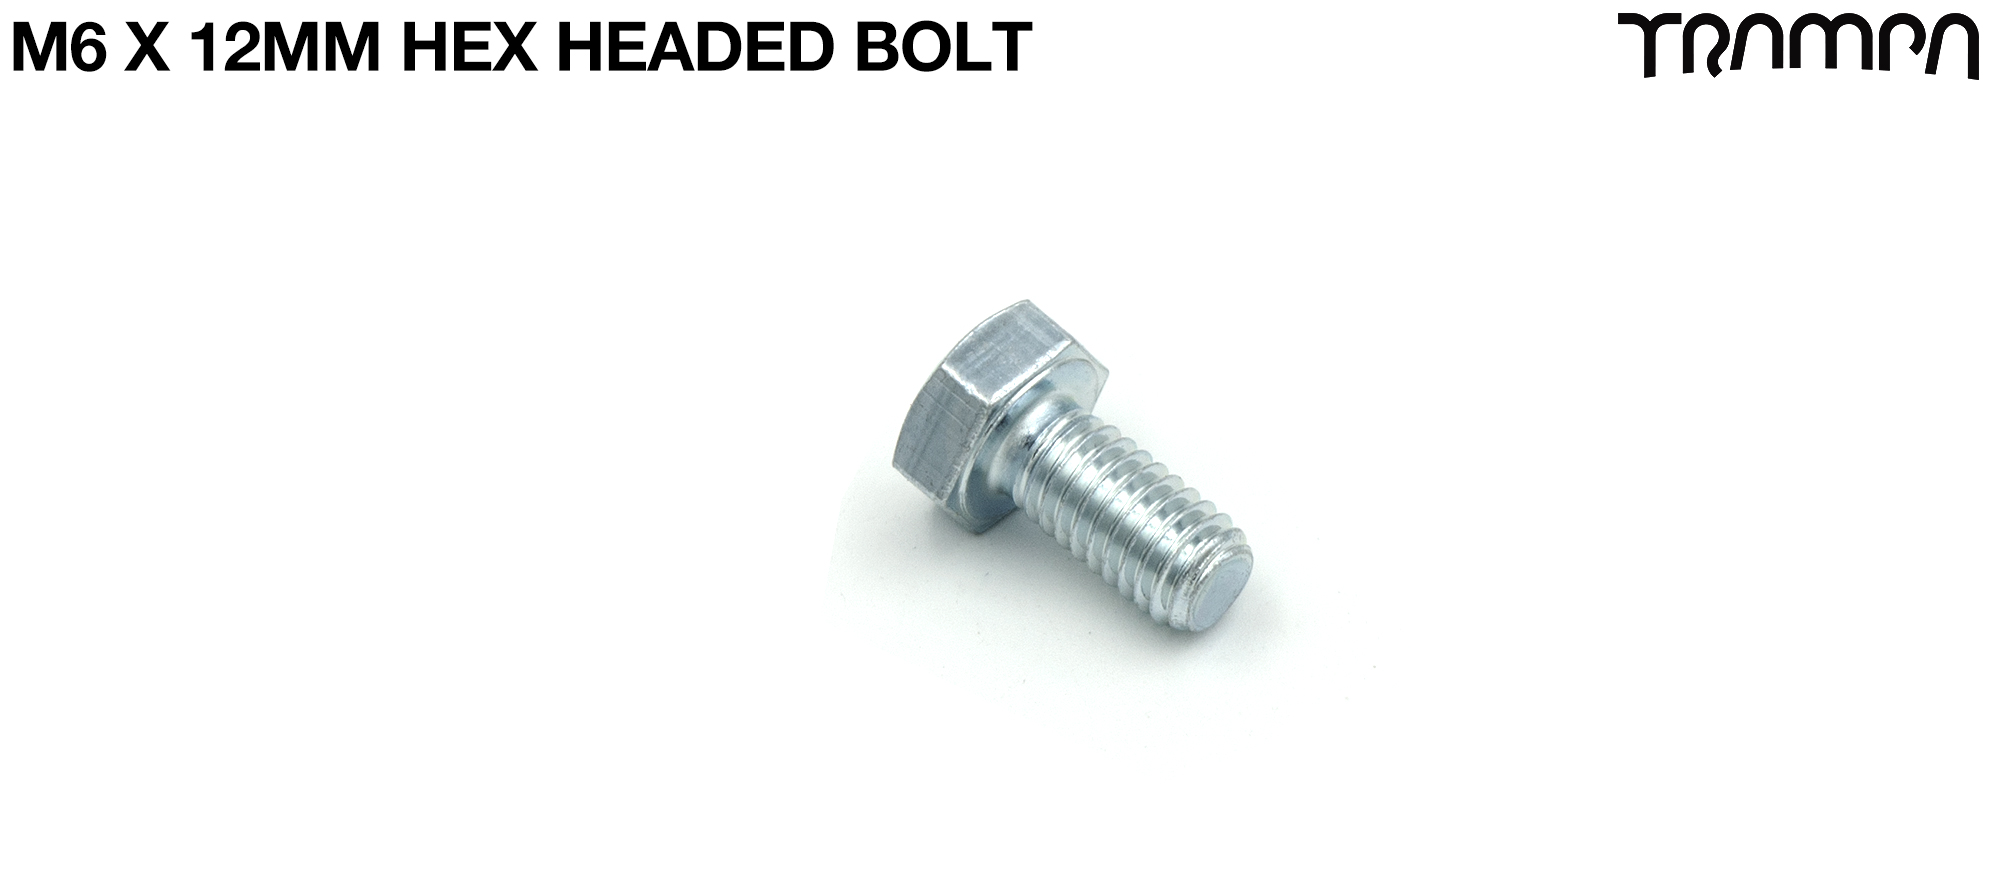 M6 x 12mm Hex Head Bolt - High Tensile 8.8 Bright Zinc Plated